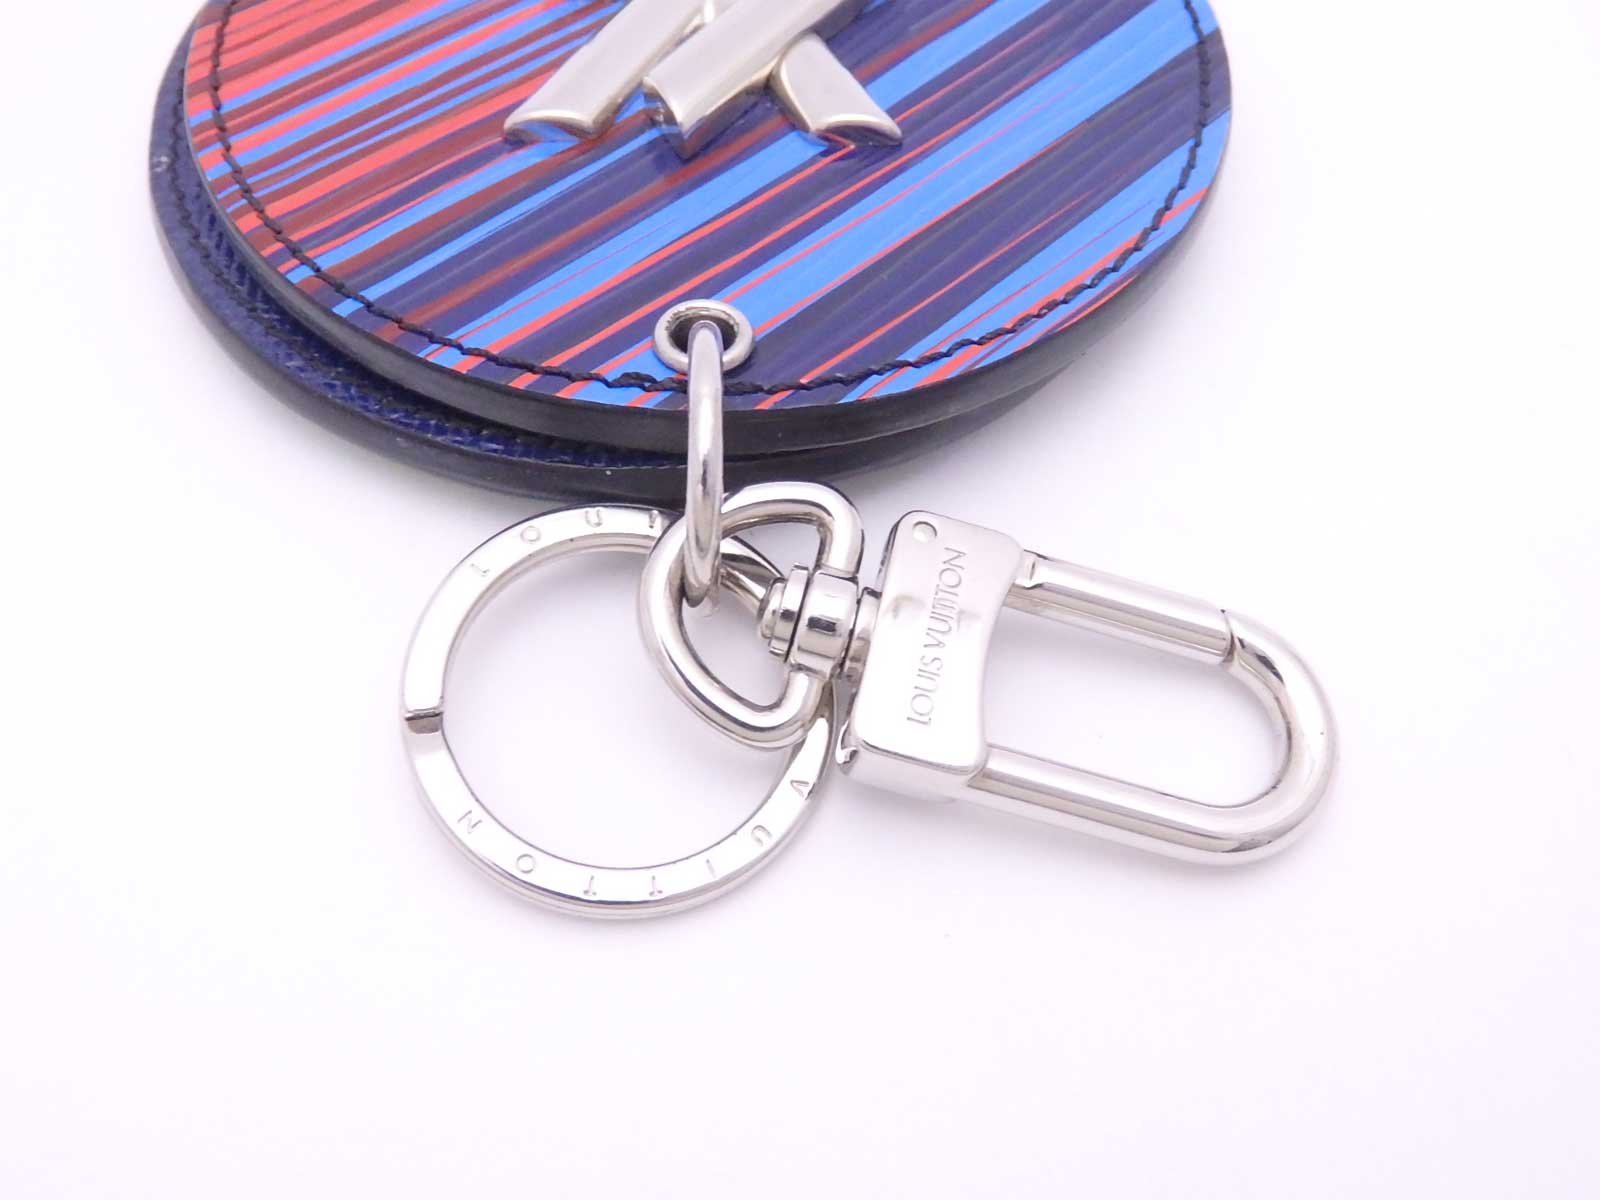 Auth Louis Vuitton Epi Bag Charm LV Mirror Bag Charm Keyring Blue/Red - e43886 | eBay